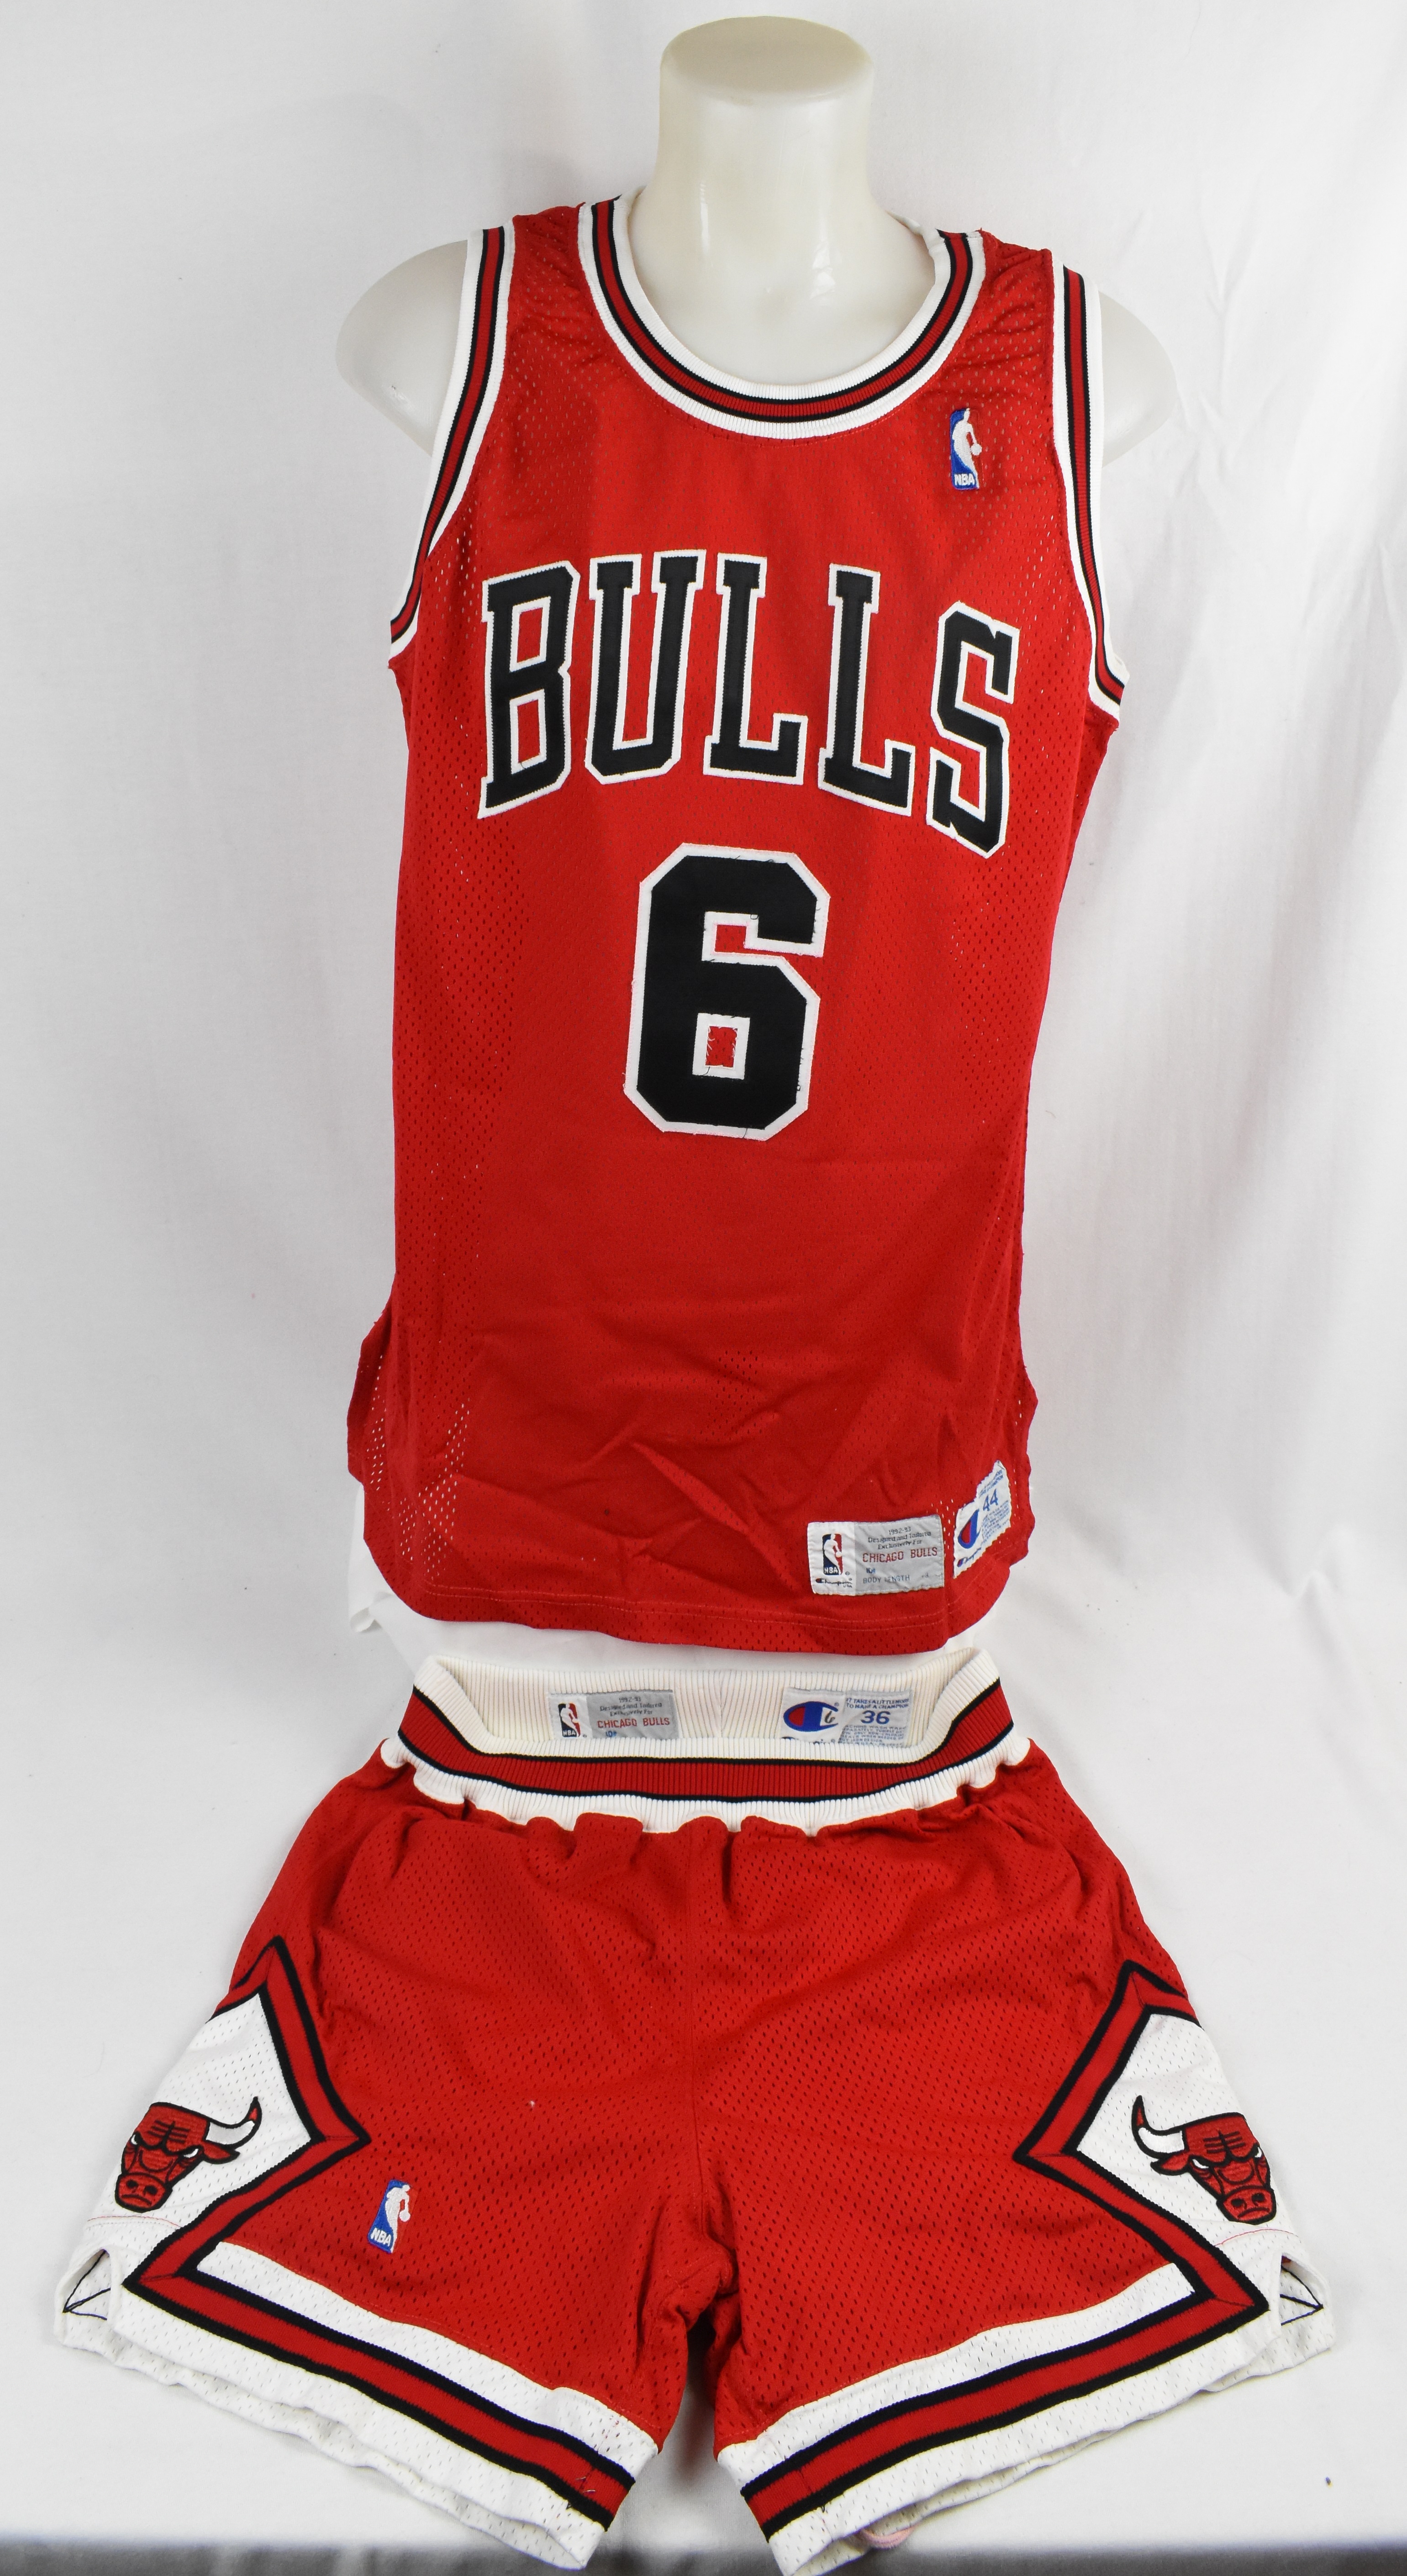 1992 bulls jersey